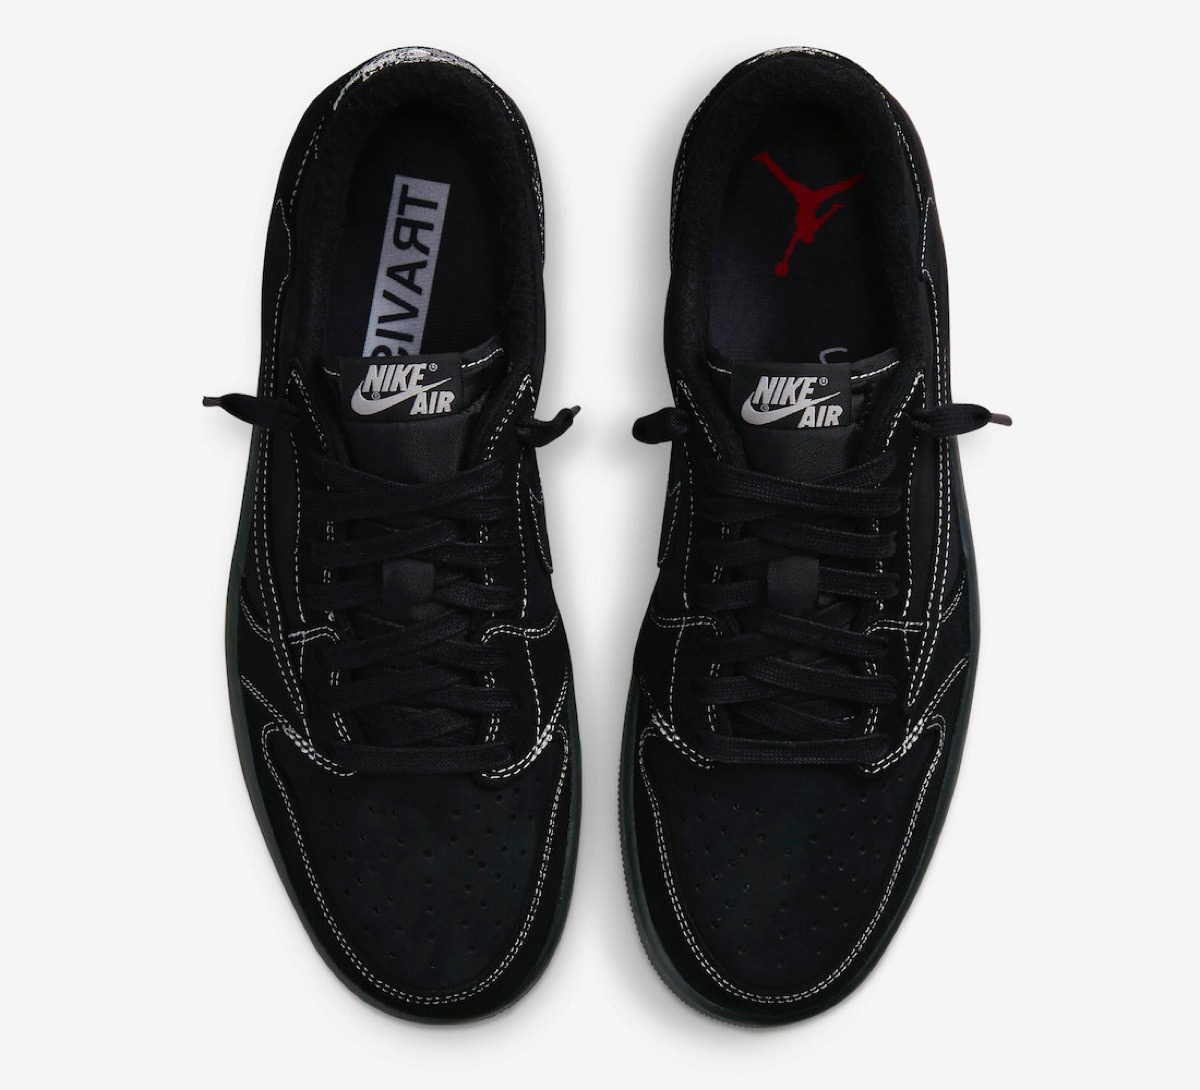 Travis Scott × Nike Air Jordan 1 Low OG SP “Black/Phantom”の国内 